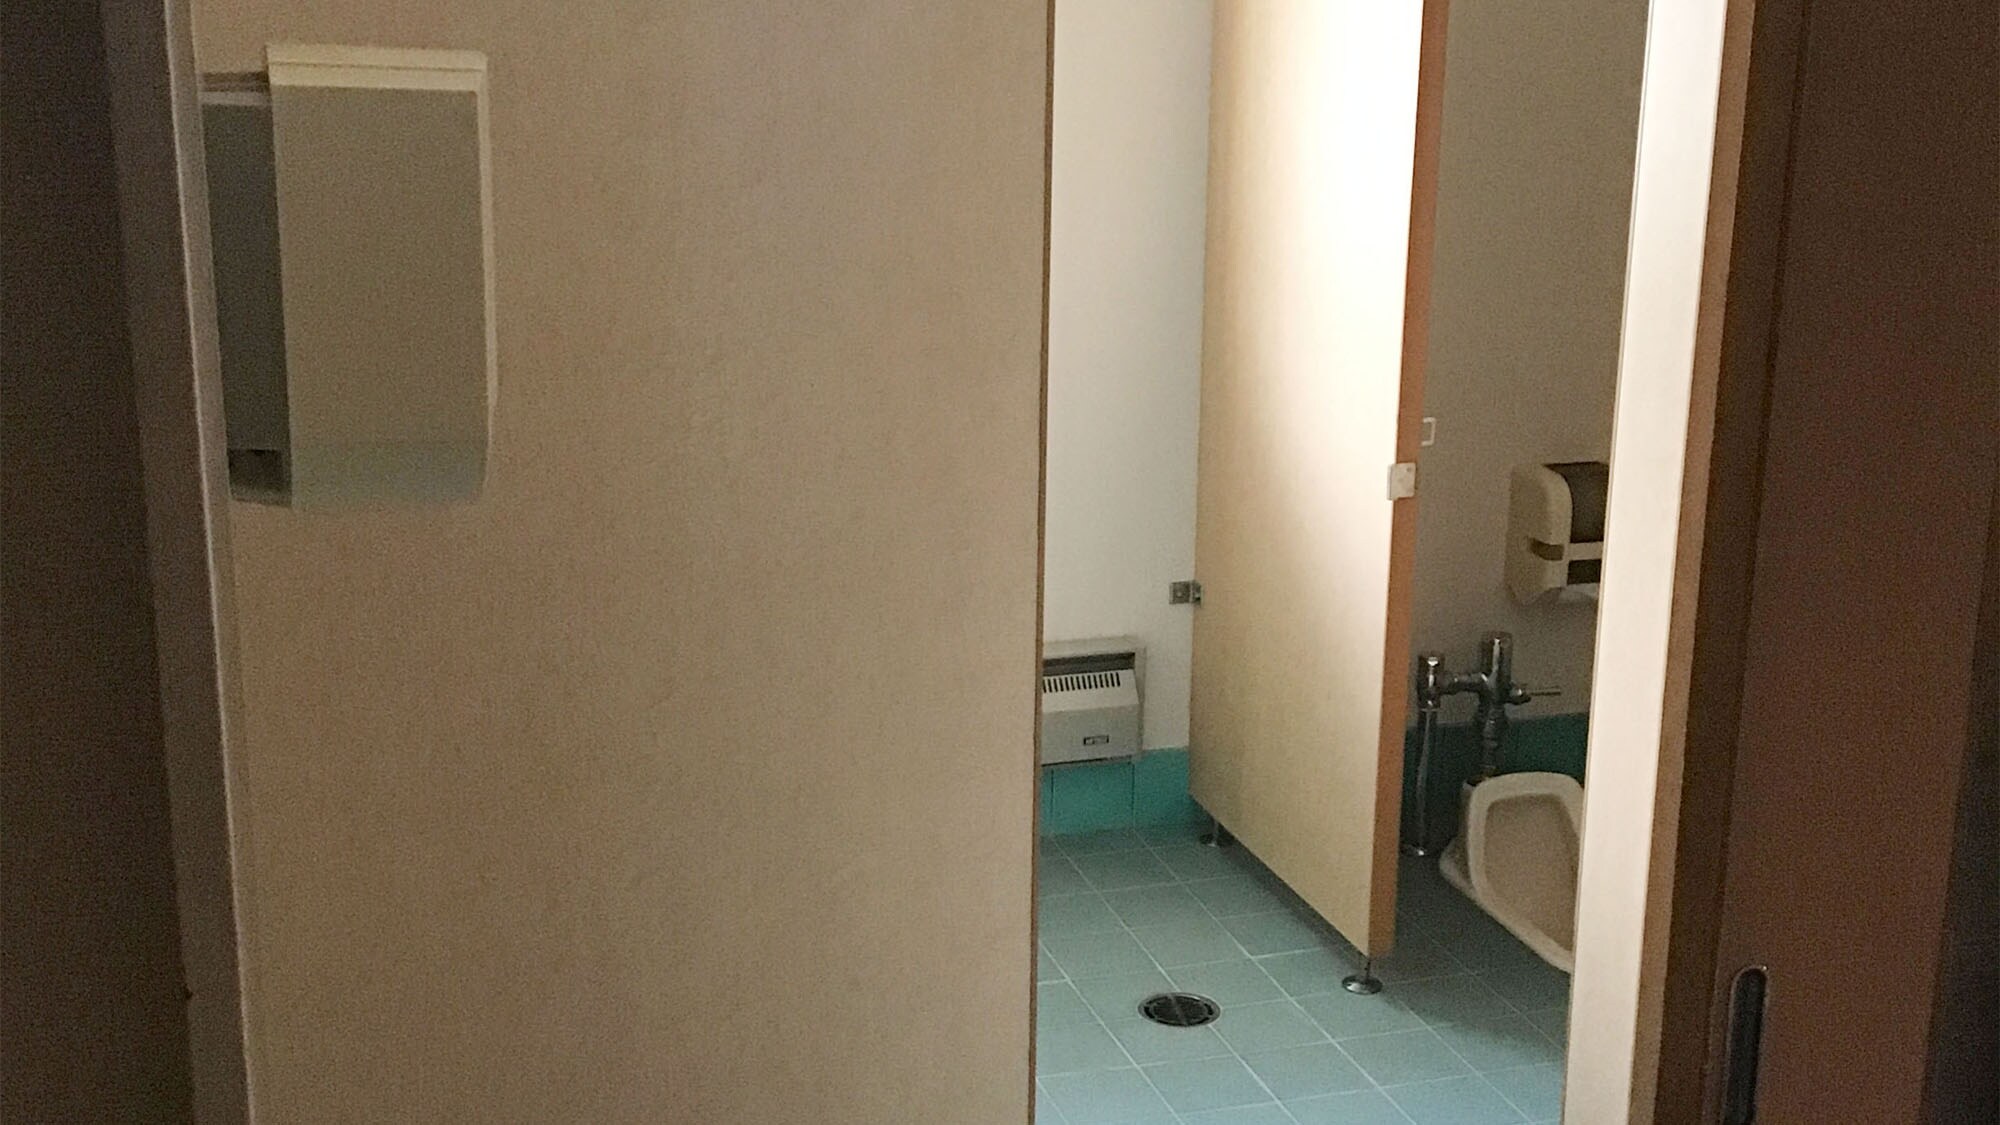 Toilet di kamar bergaya Jepang digunakan bersama.